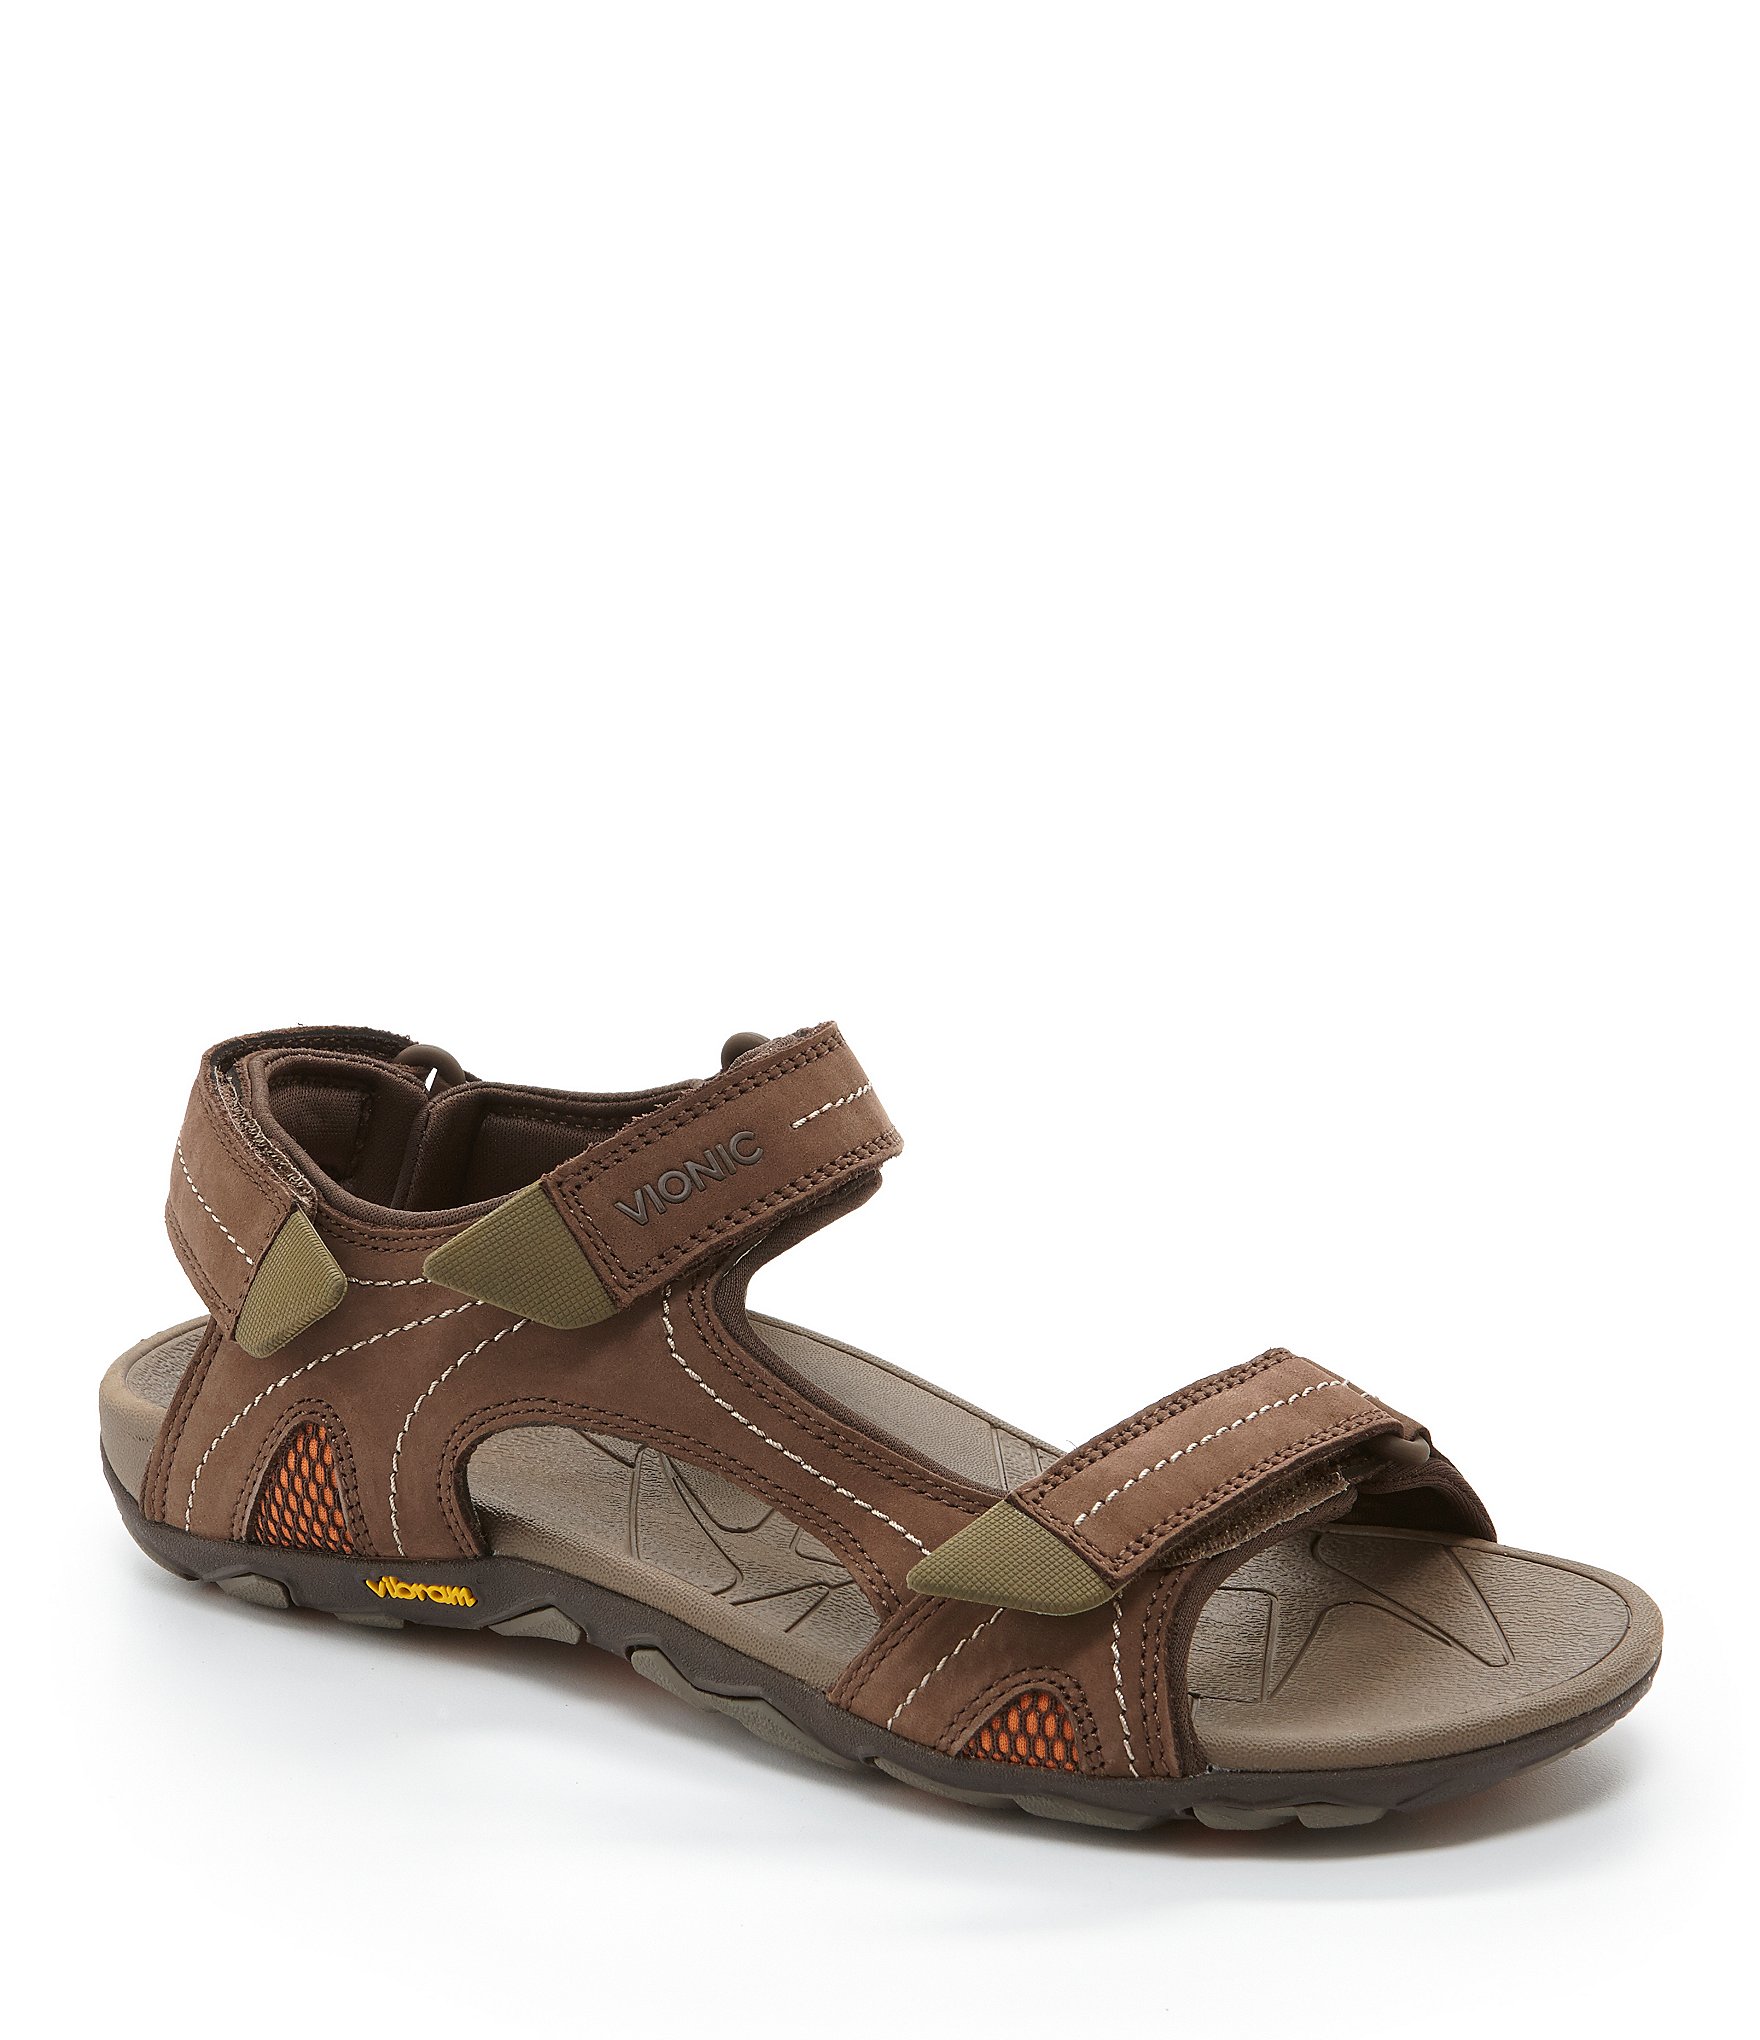 Vionic® with Orthaheel® Technology Men's Boyes Sandals | Dillards